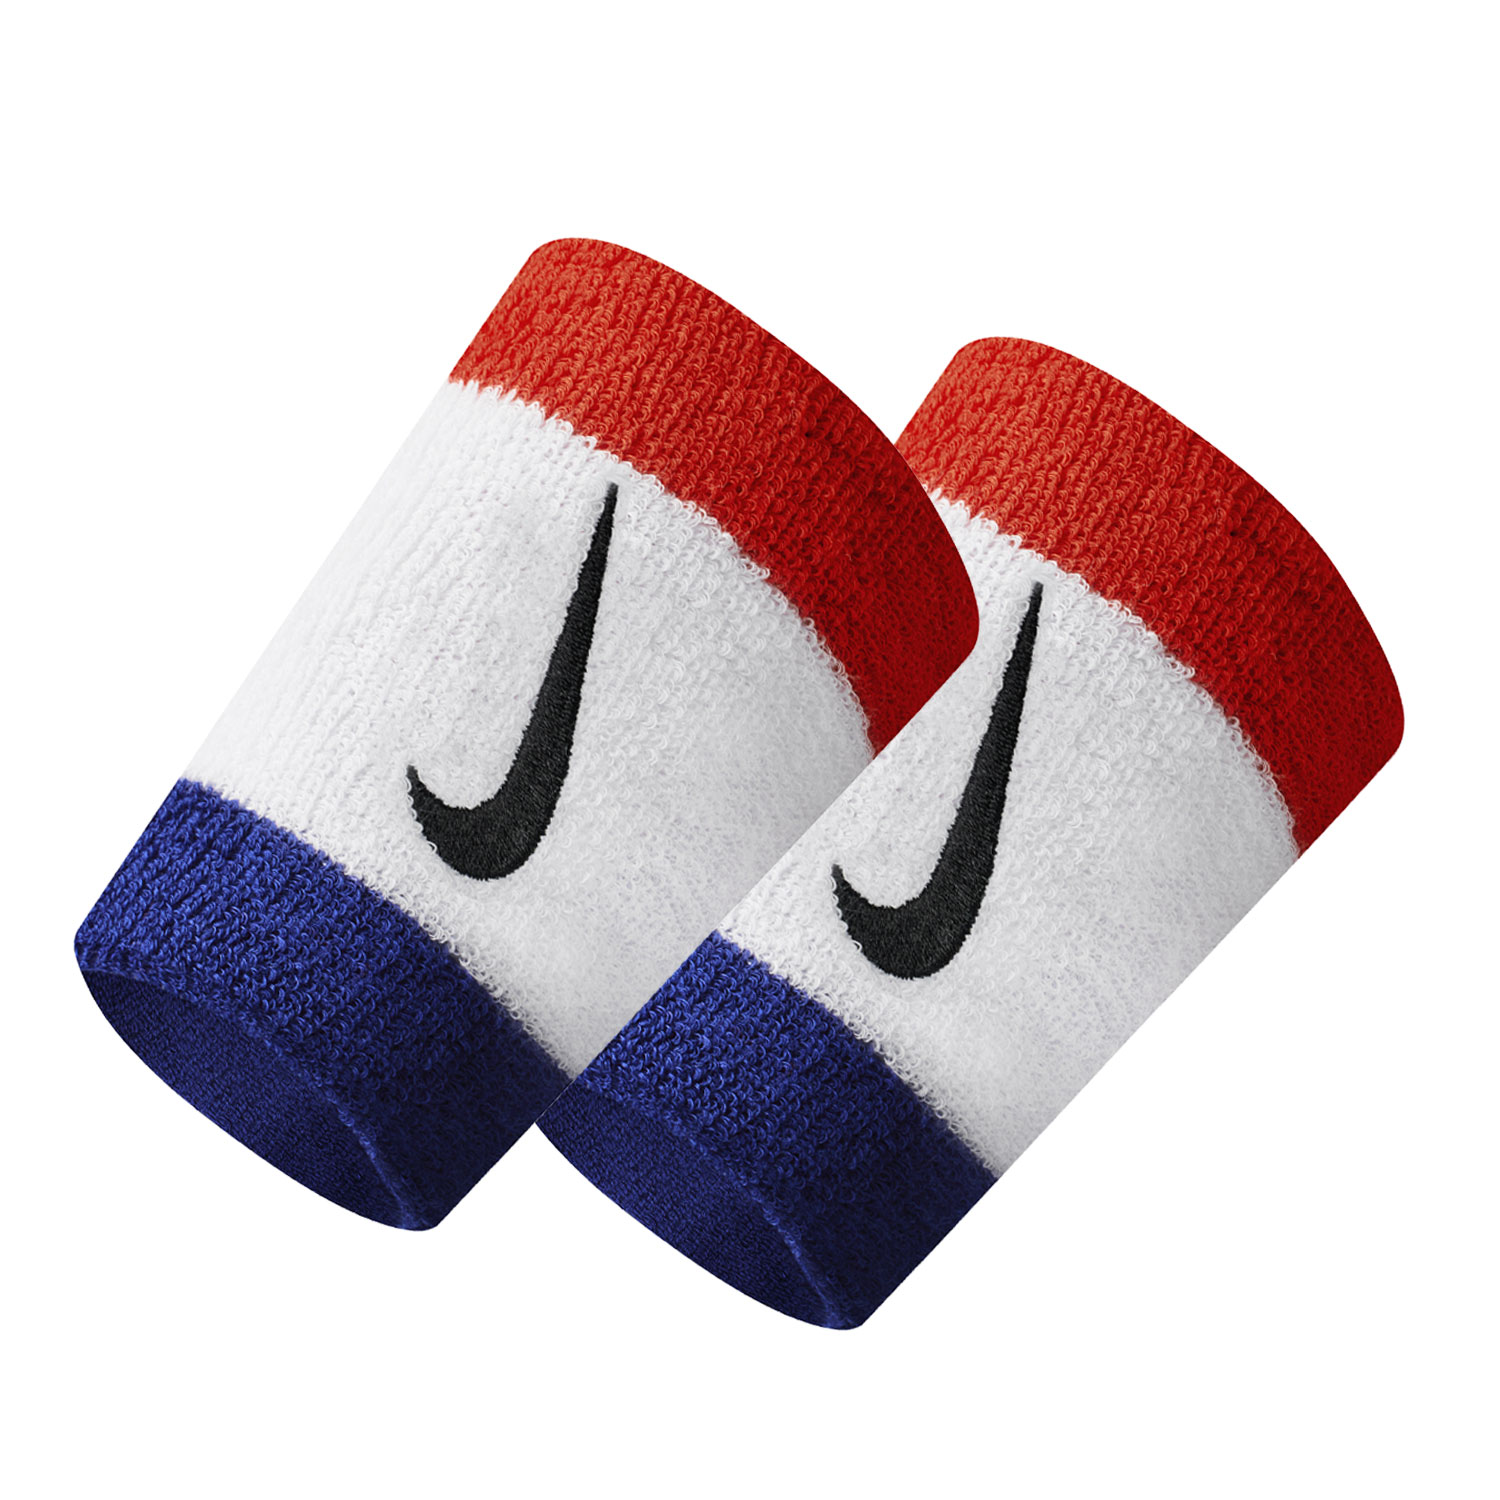 Nike Logo Big Wristbands - Blue/White/Red